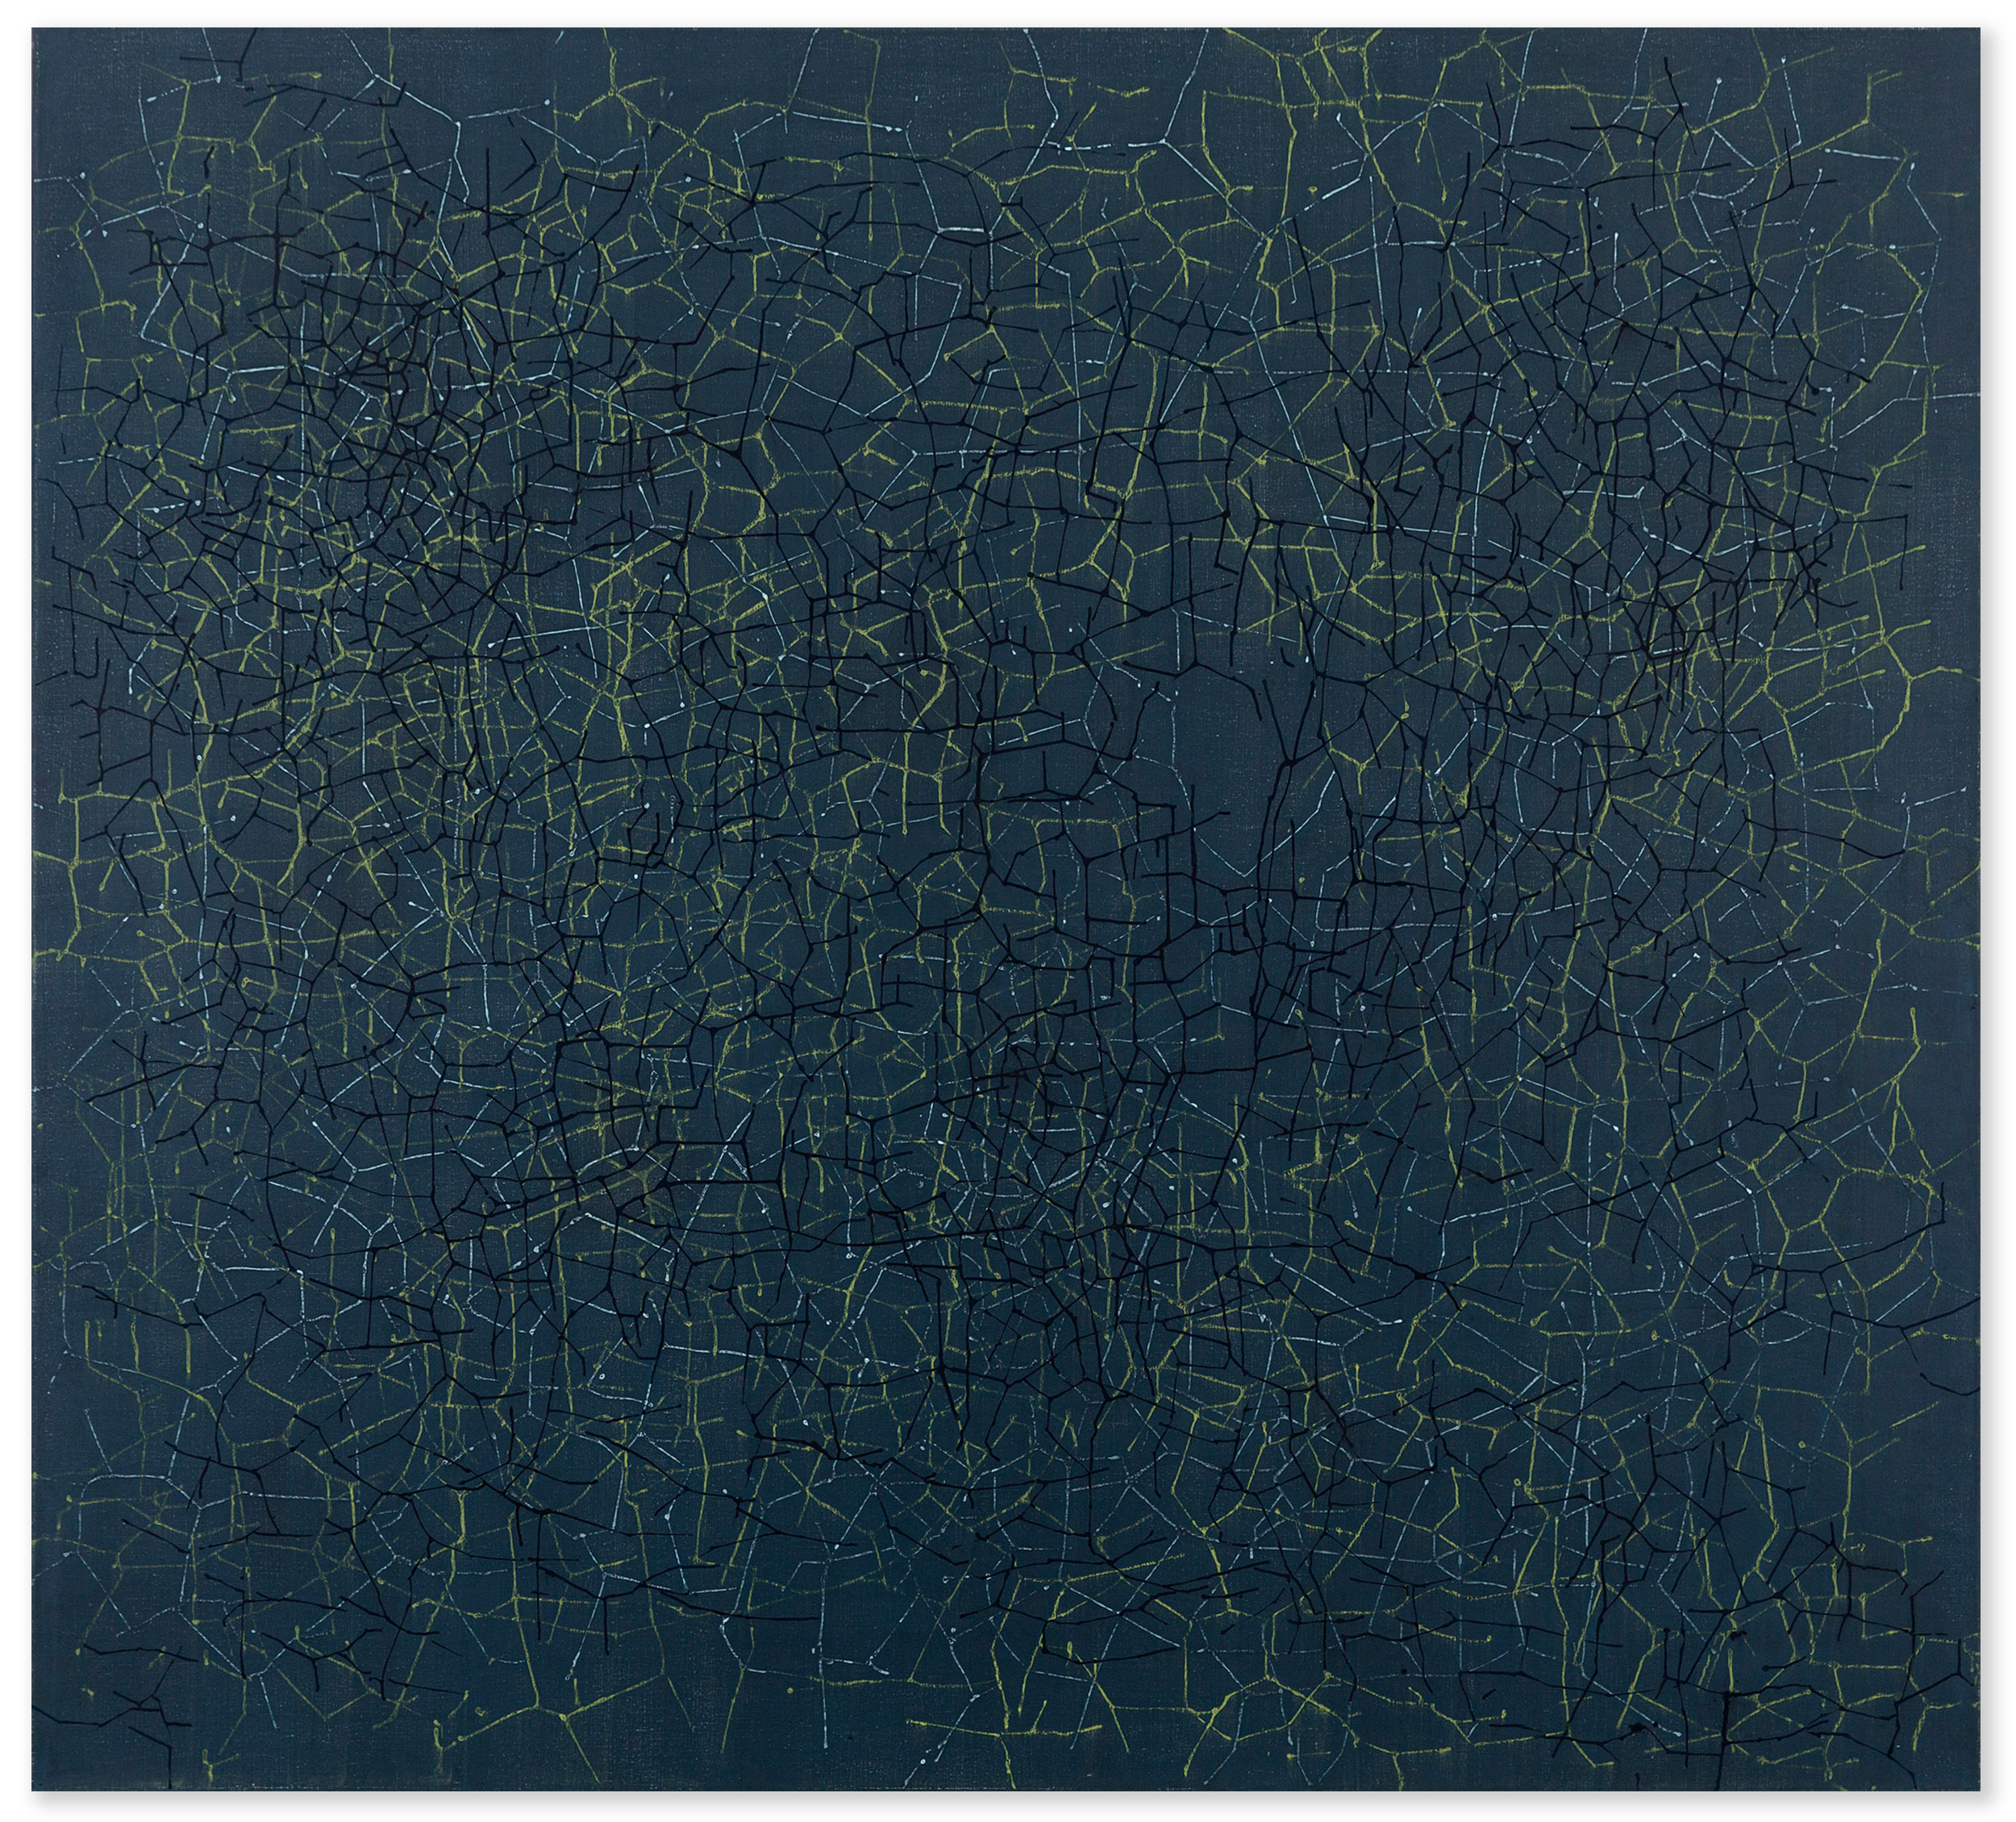 DW K11 / 2015 · egg tempera on canvas · 180 x 200 cm